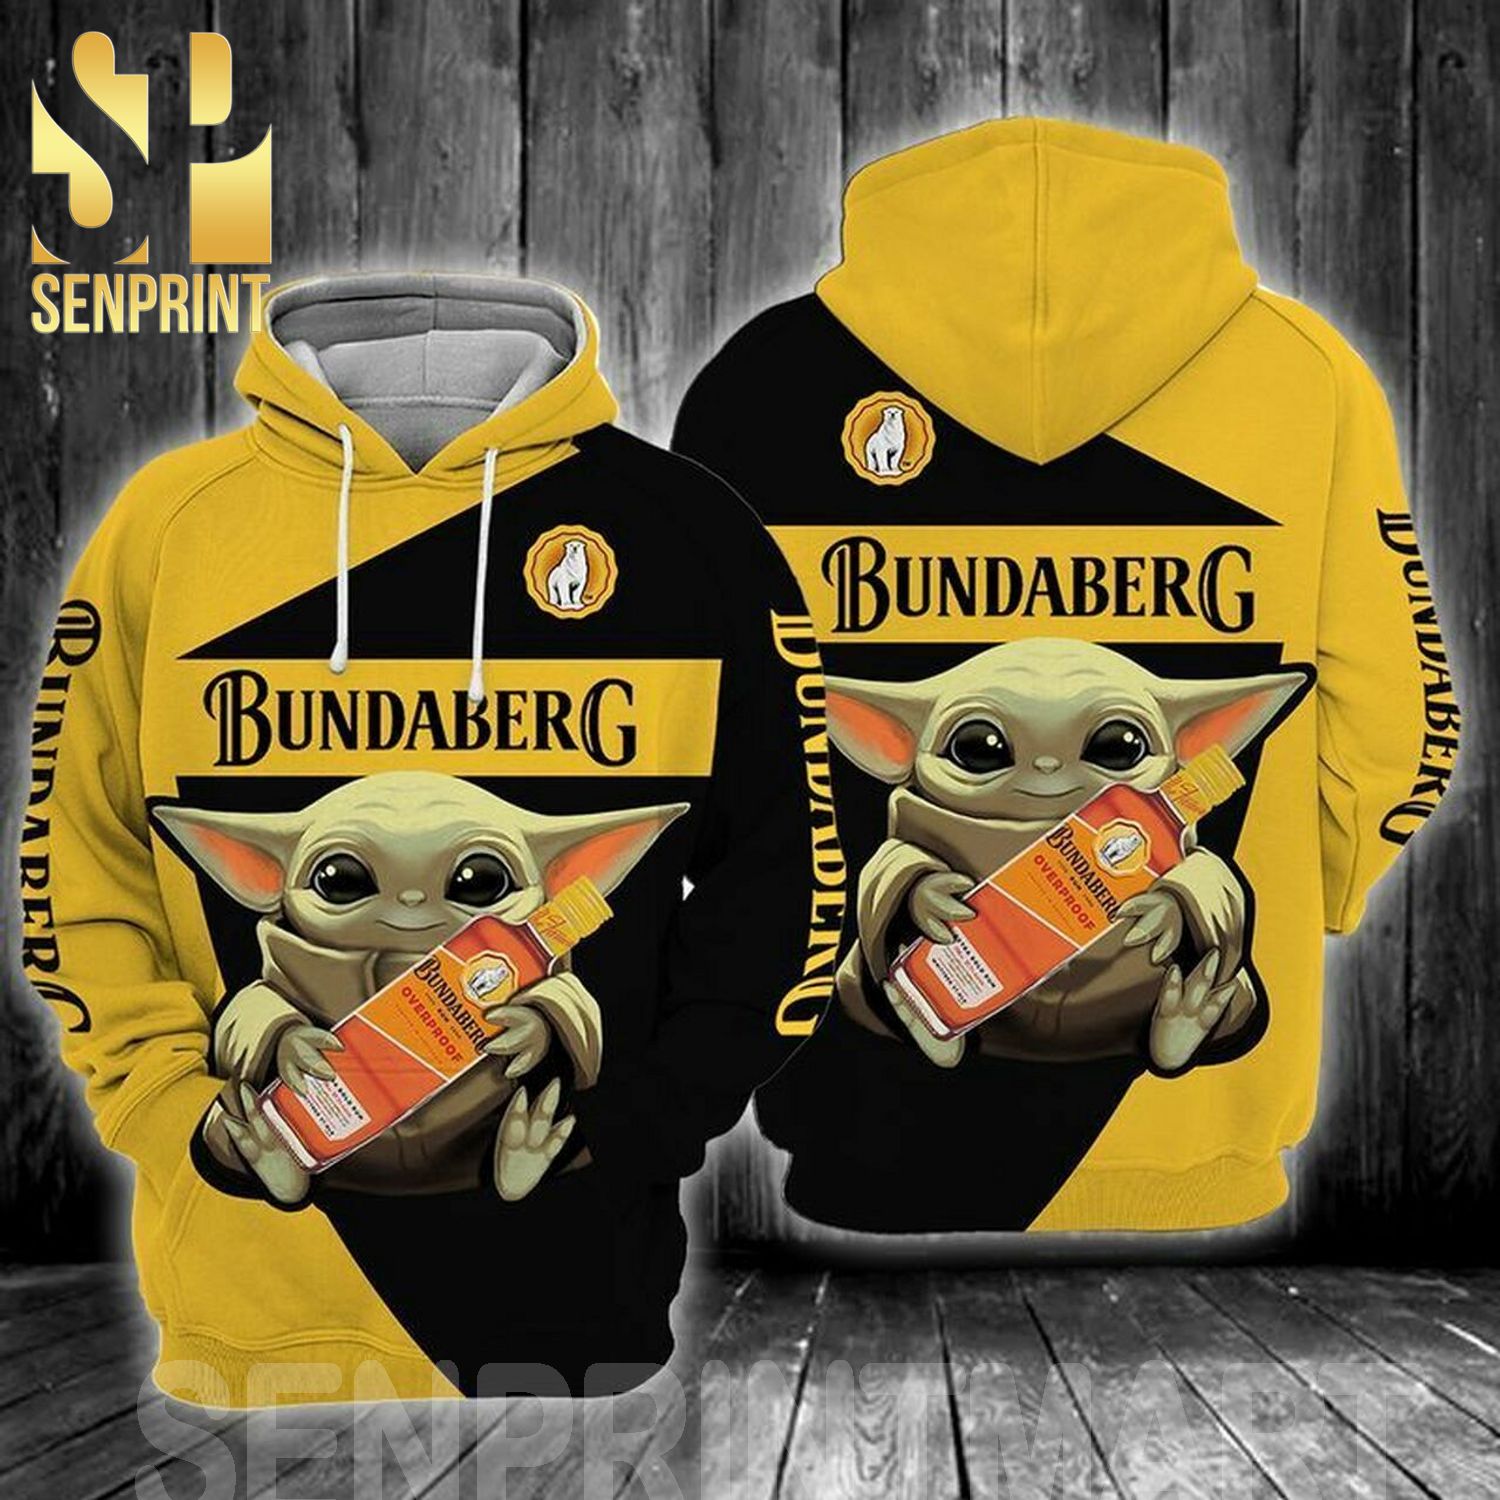 Baby Yoda Bundaberg Drink Star Wars Pattern Full Printing Shirt